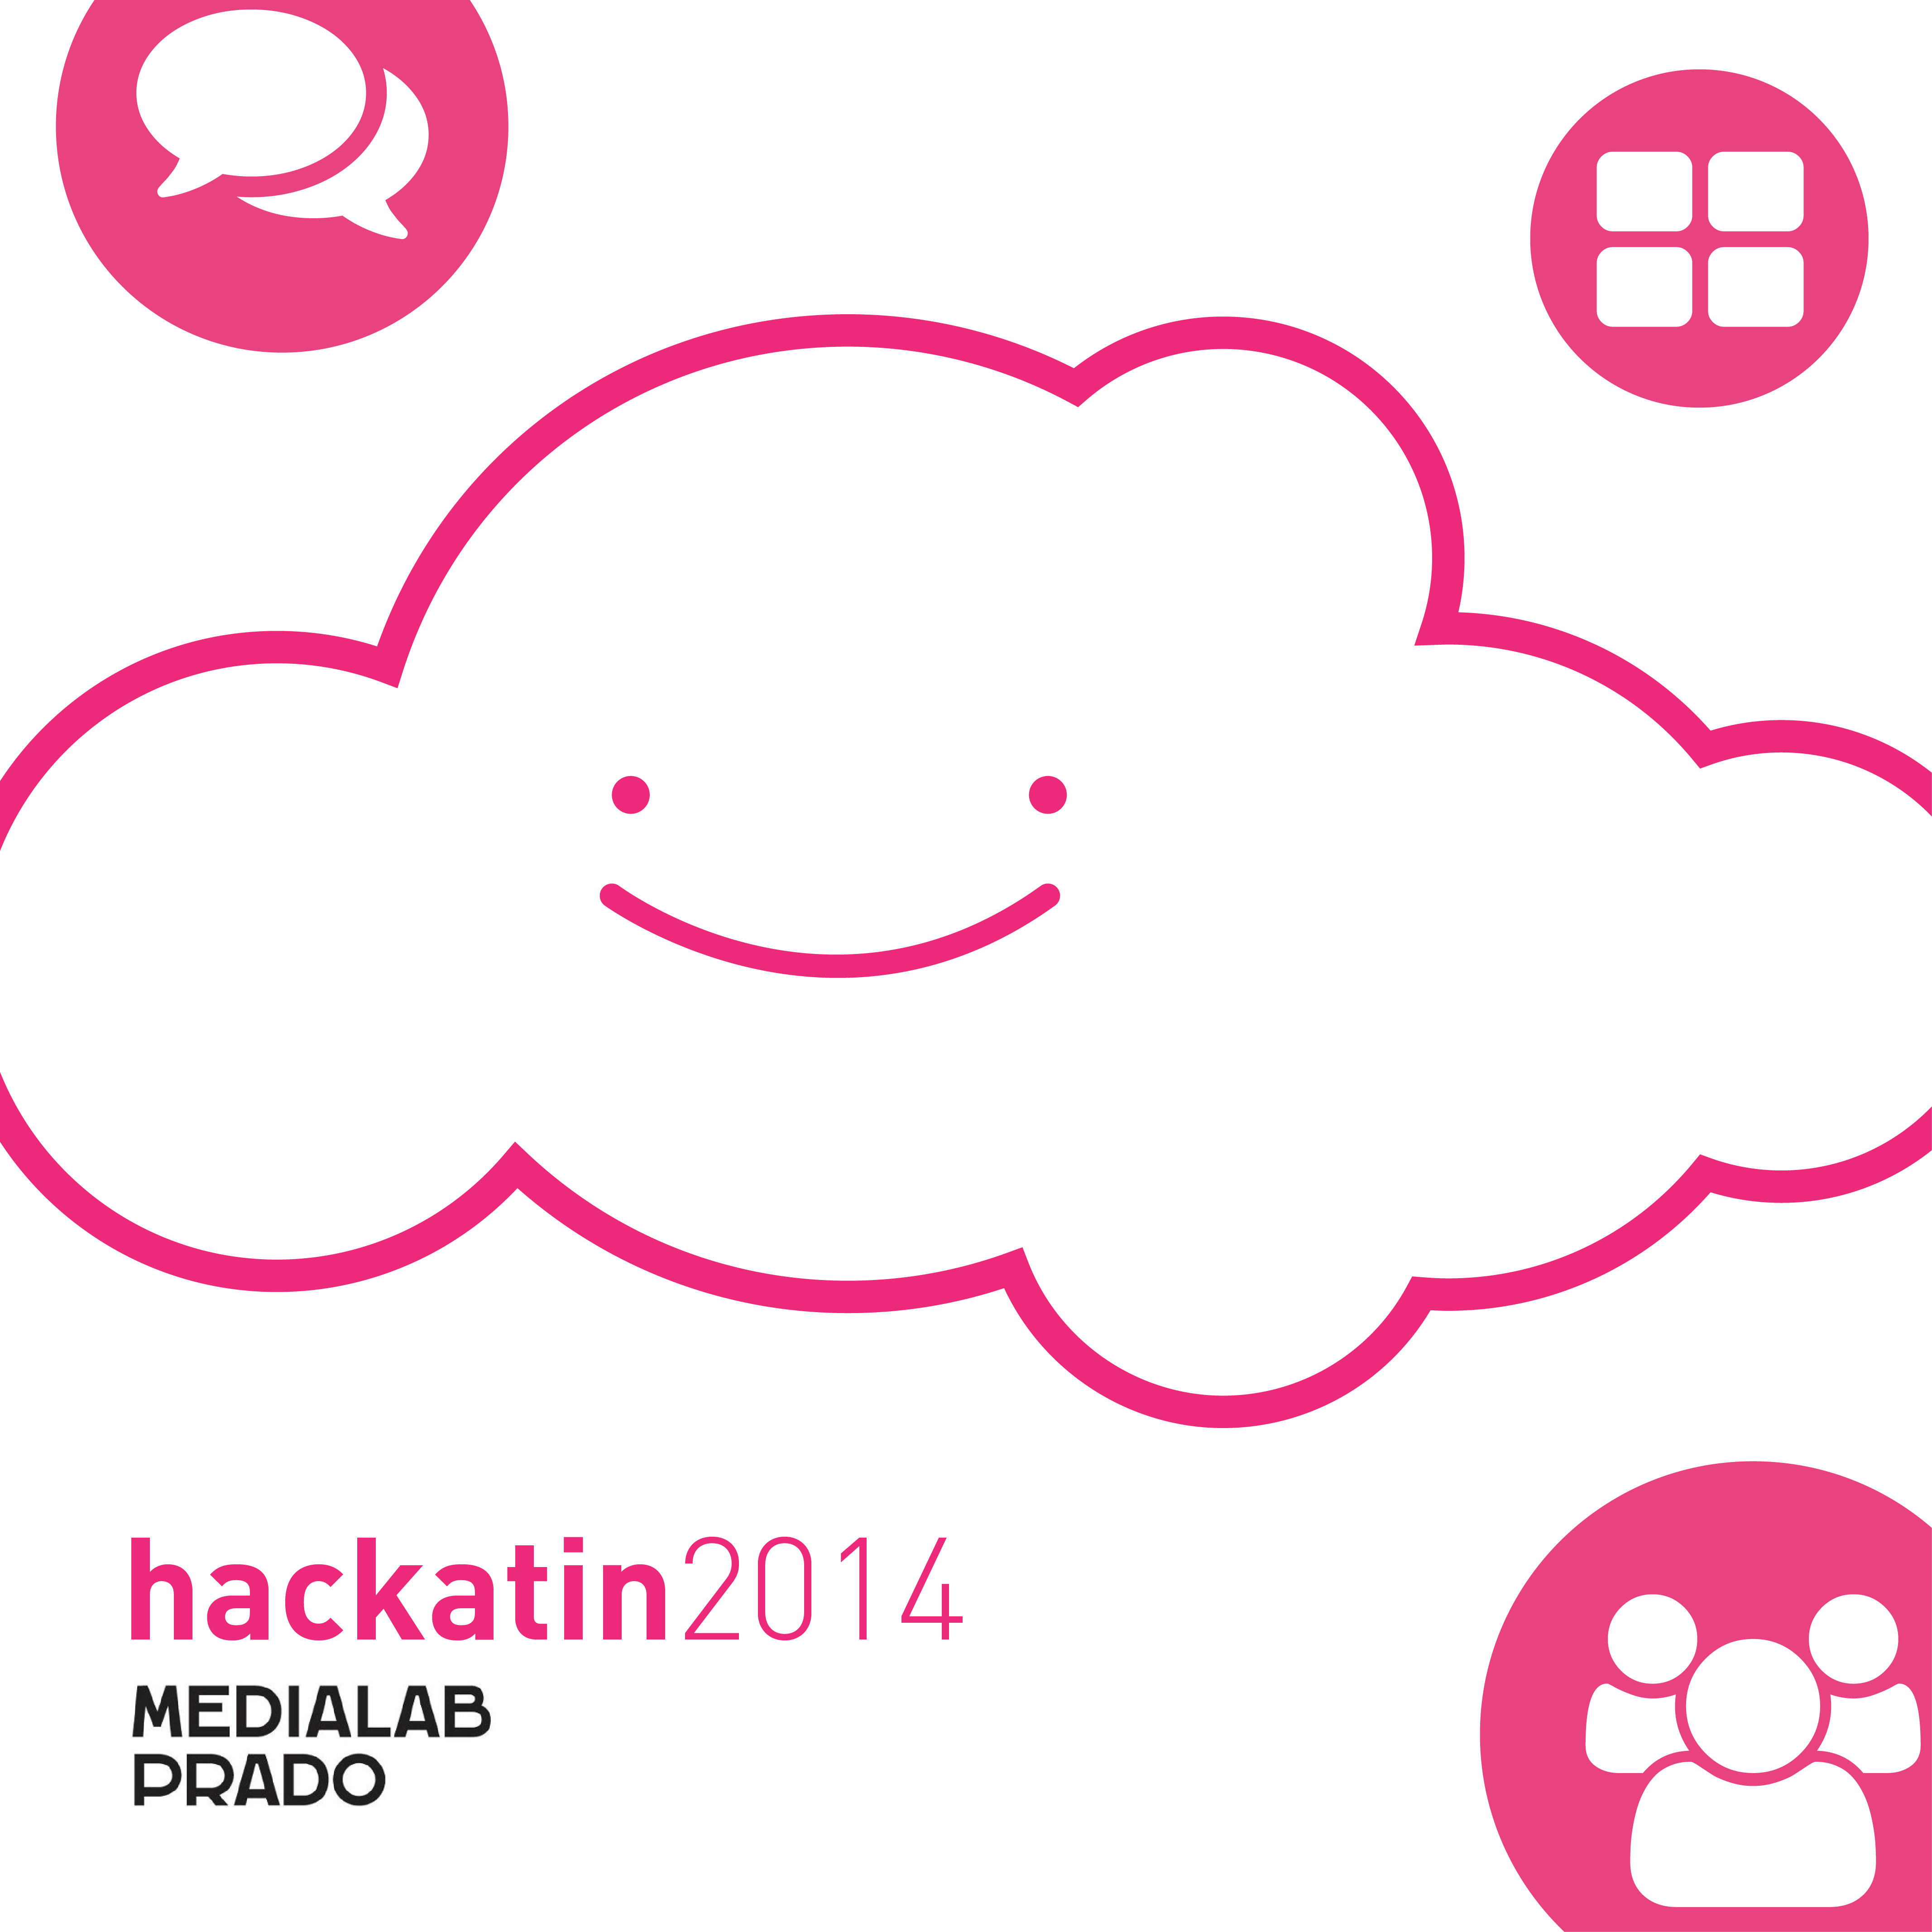 Hackatin 2014